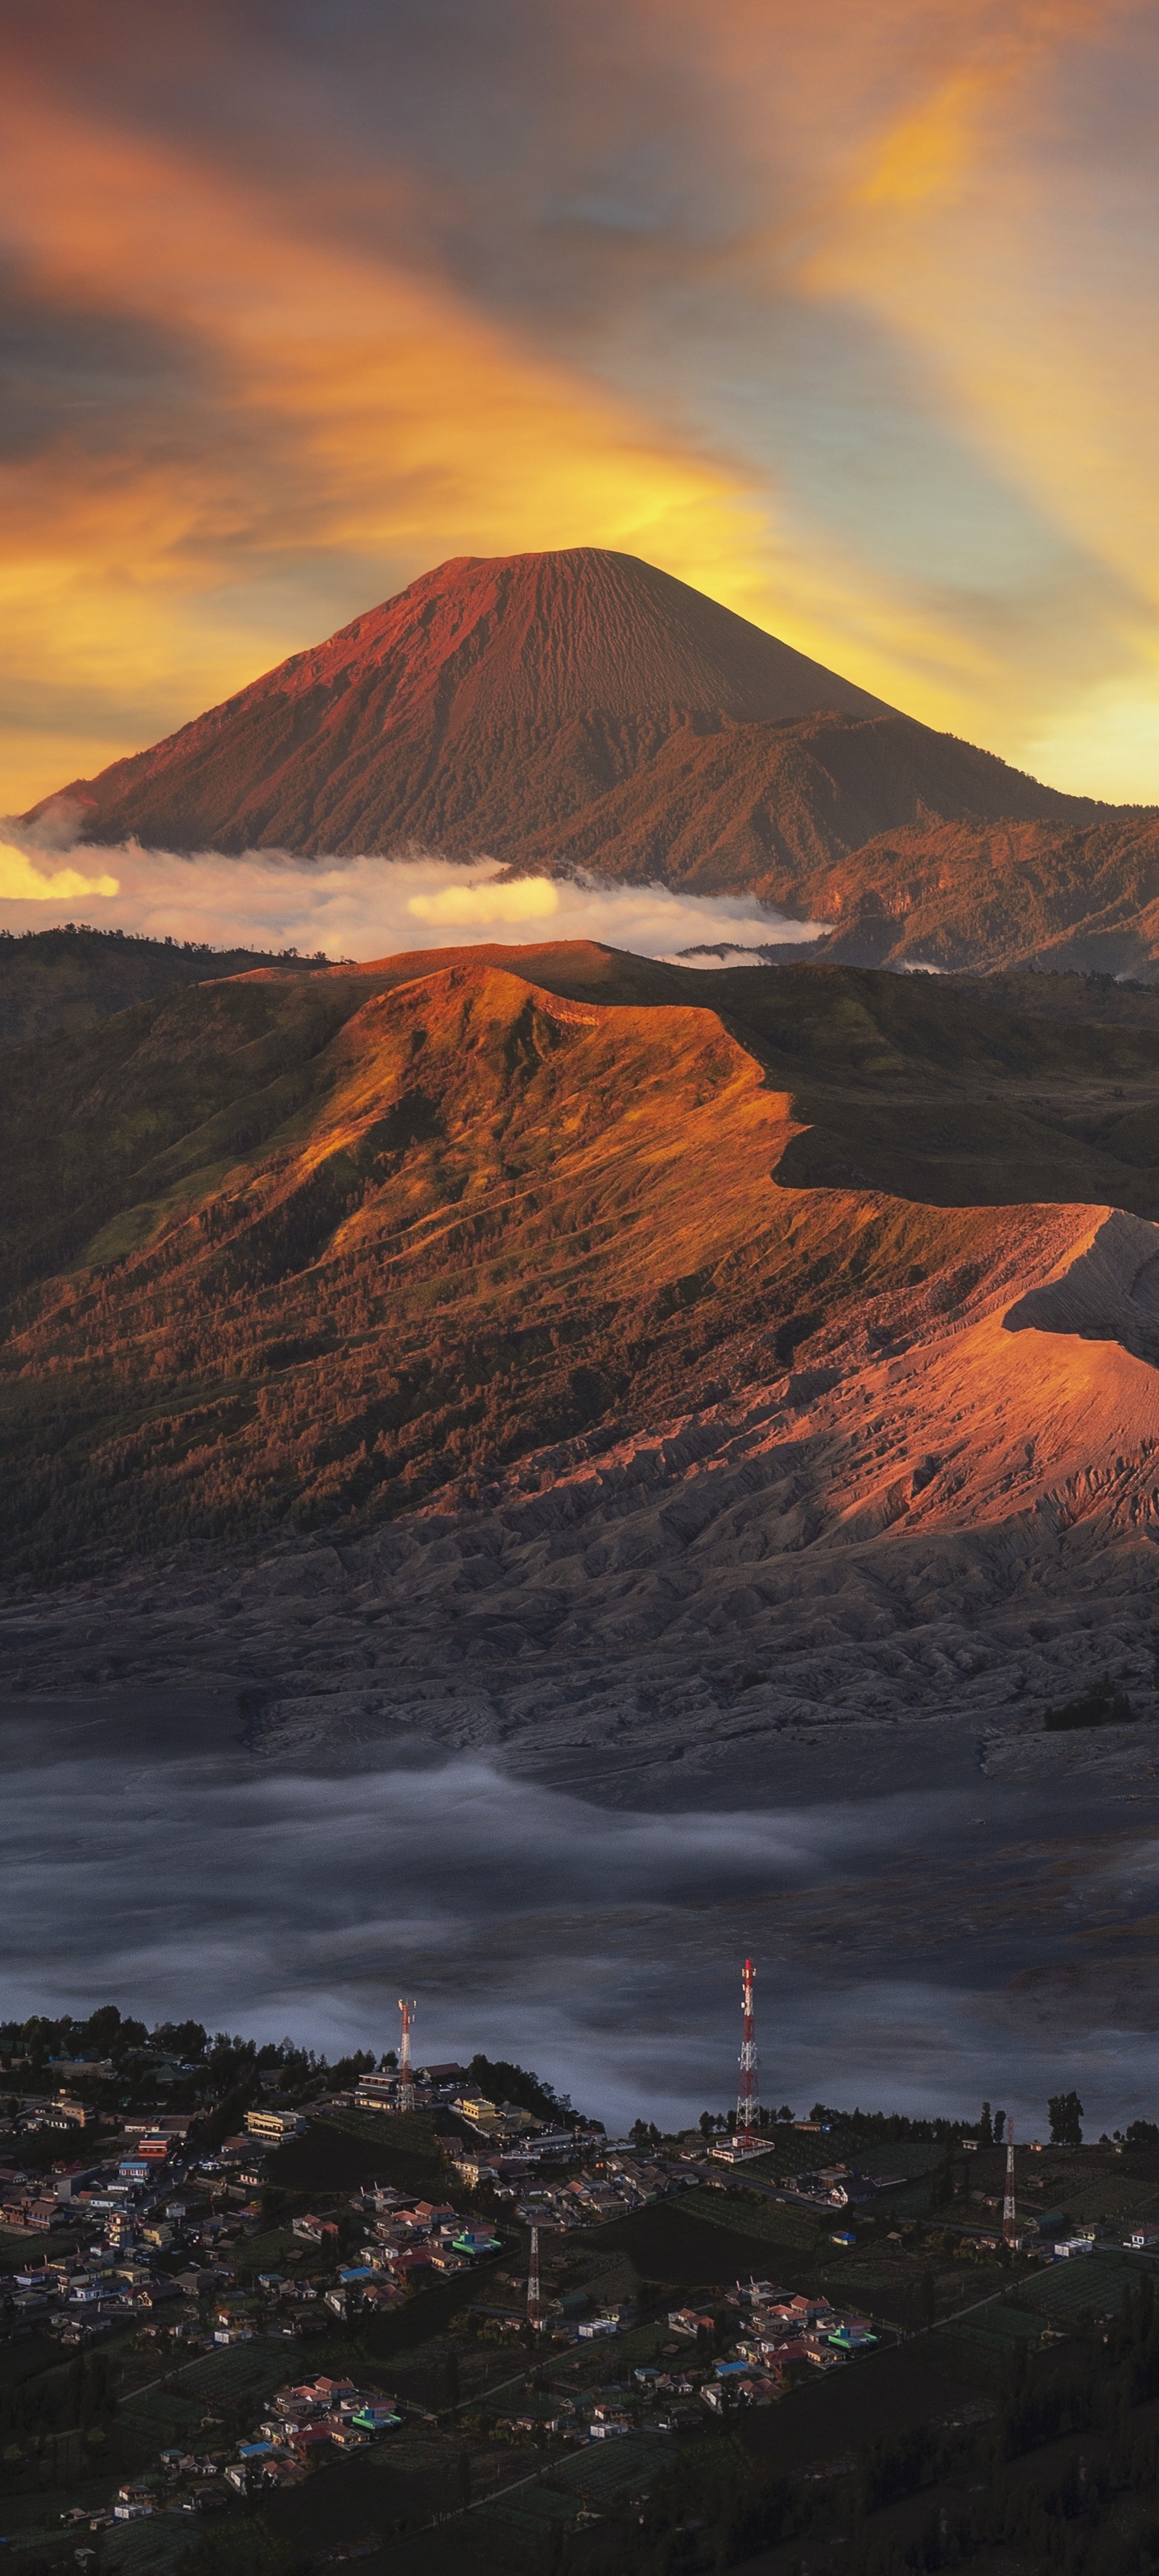 1185807 Bild herunterladen erde/natur, berg bromo, vulkan, sonnenuntergang, indonesien, berg, gebirge, vulkane - Hintergrundbilder und Bildschirmschoner kostenlos